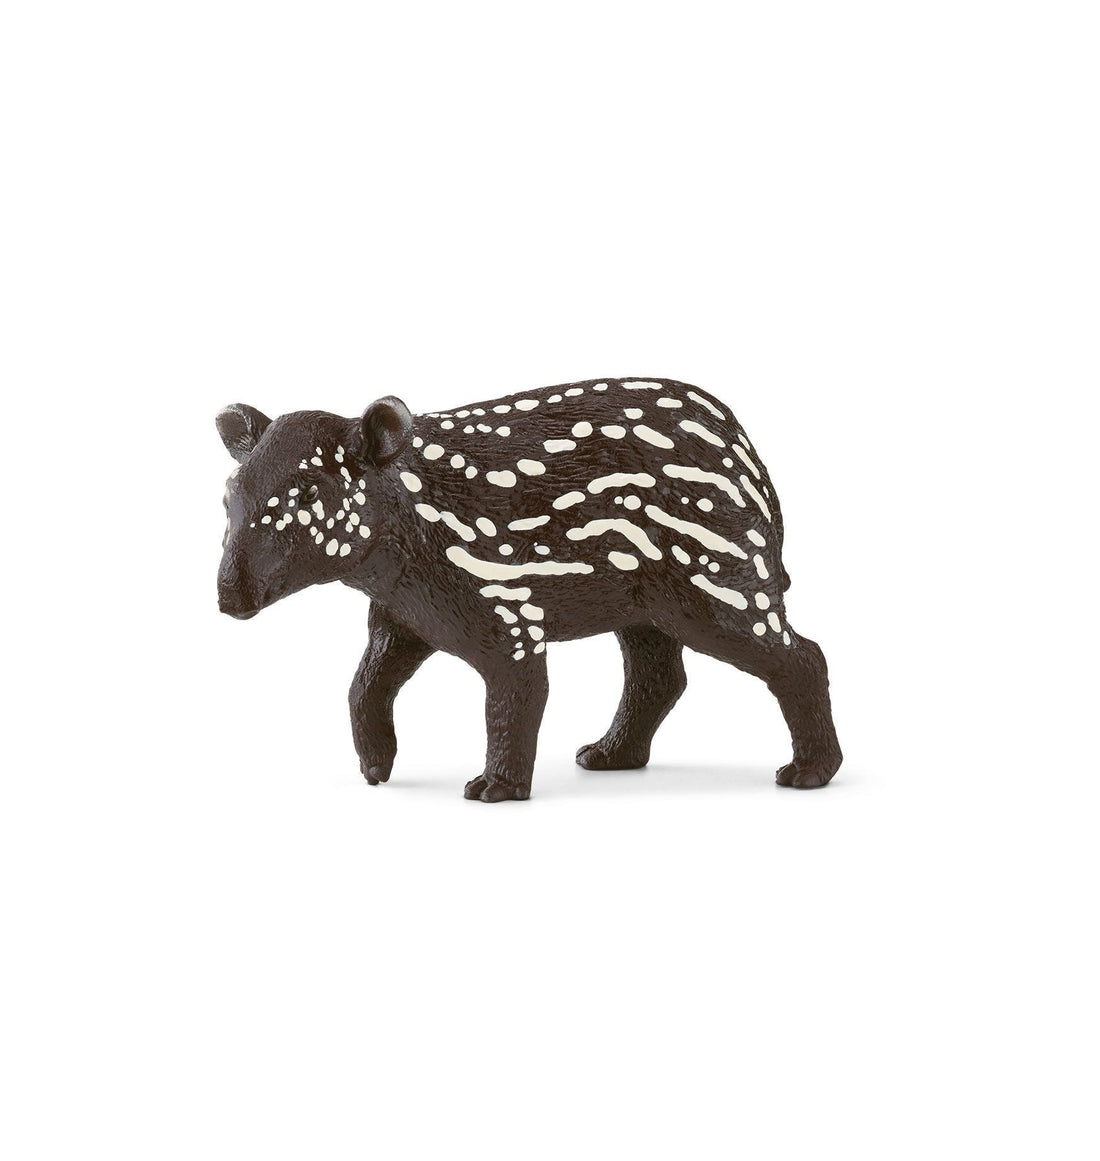 Cria de Tapir